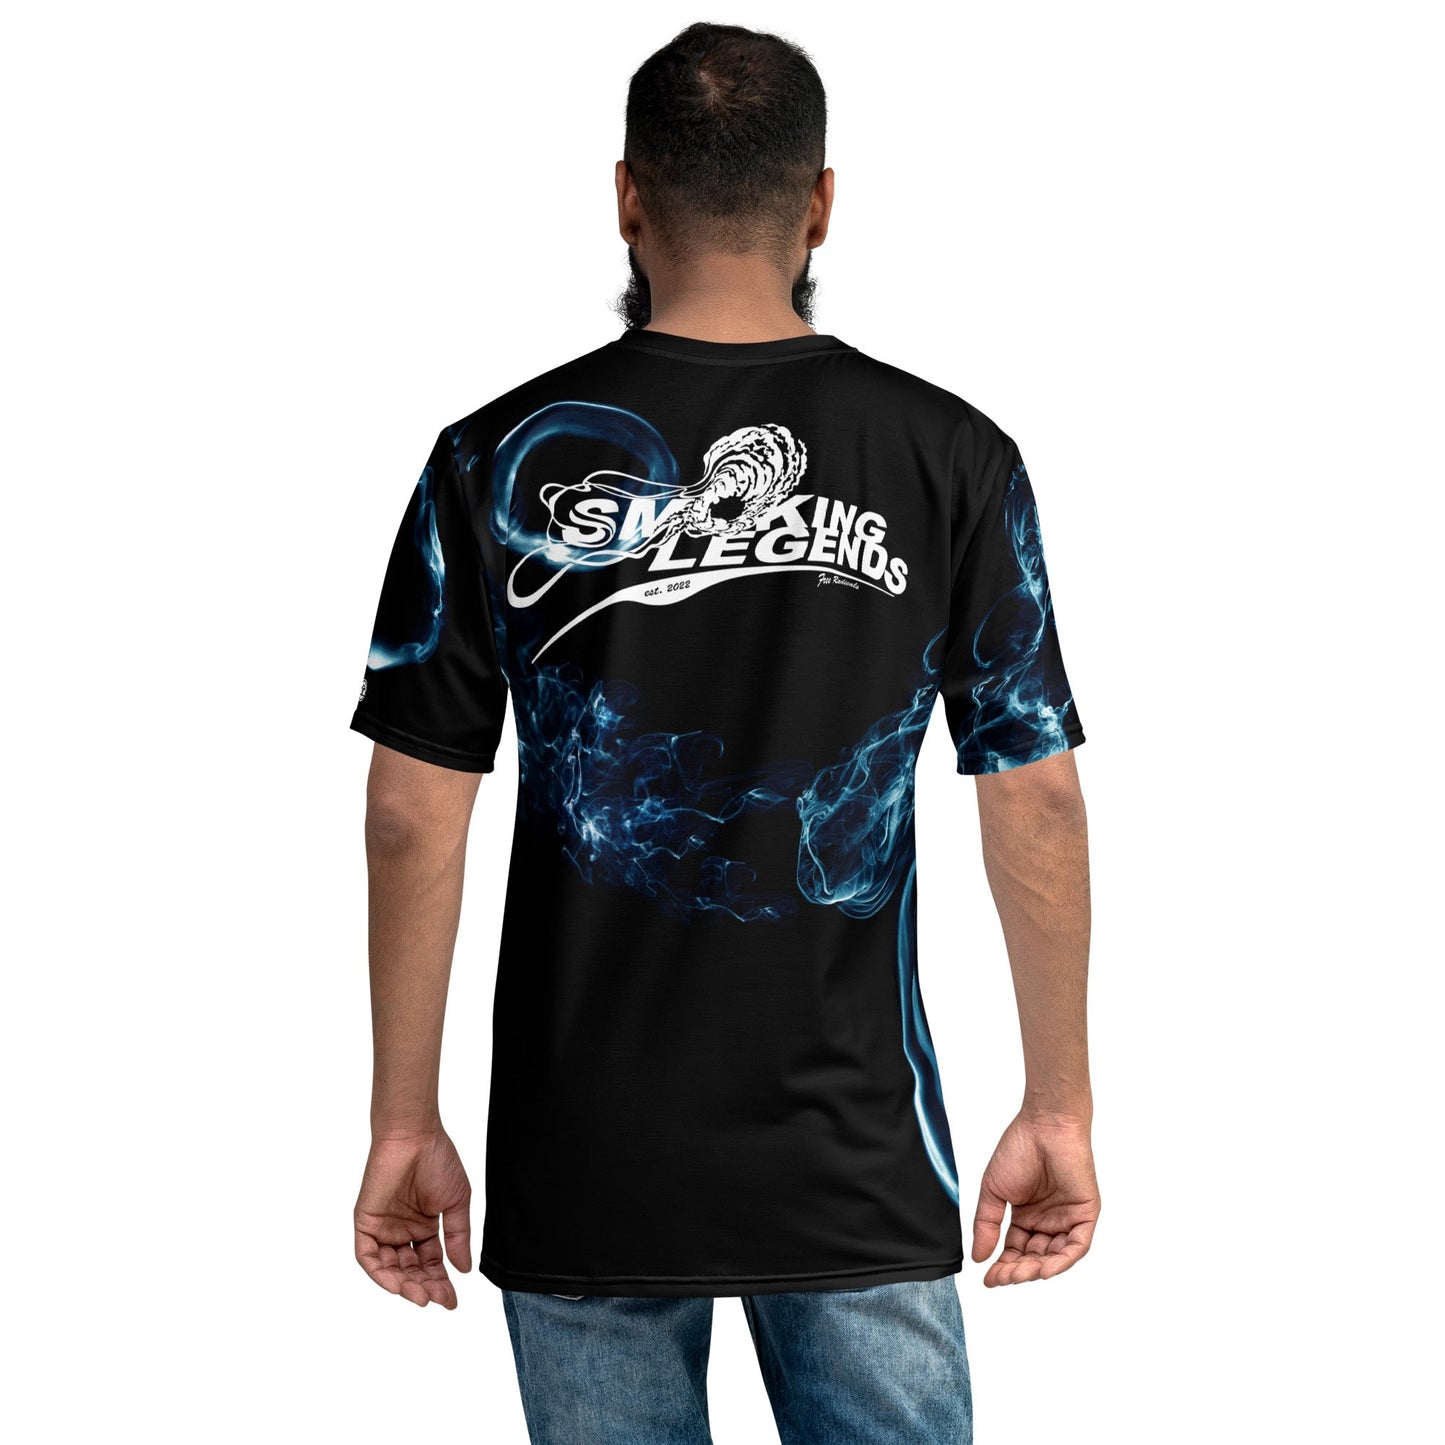 Smoking Legends BIG-1 Men's T-Shirt - City2CityWorld